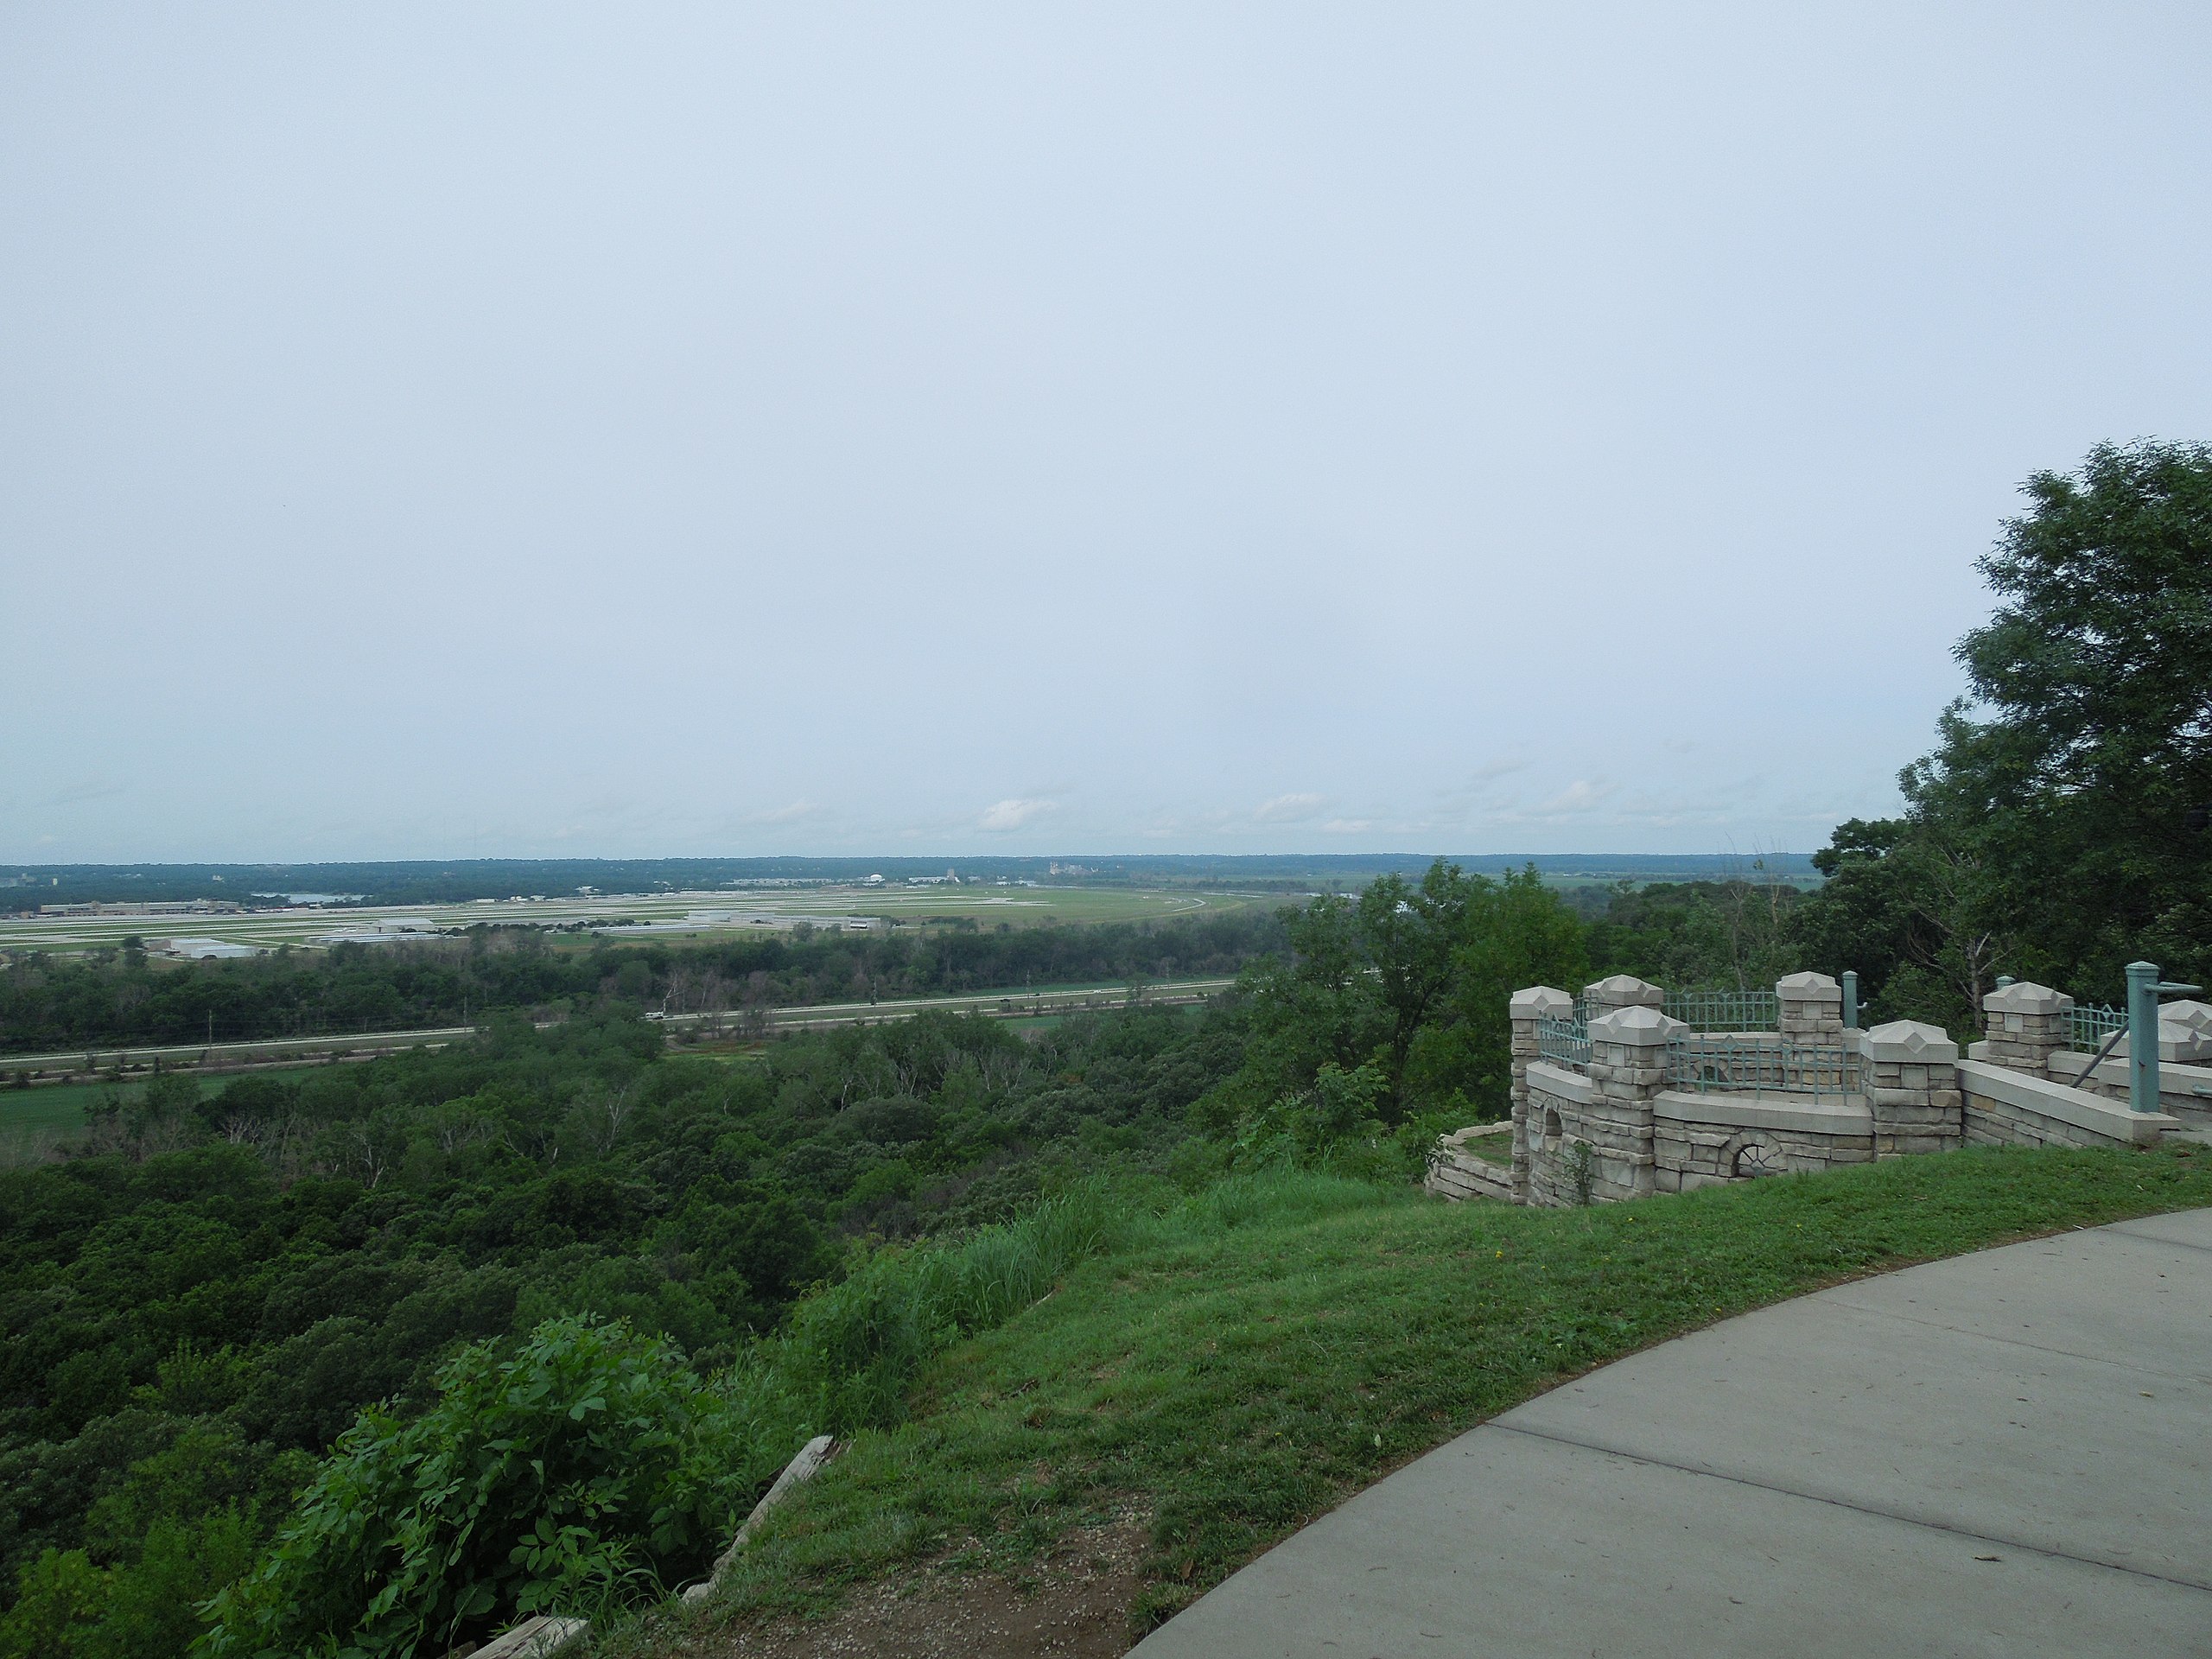 Lewis & Clark Monument Scenic Overlook | Historic Sites In Iowa